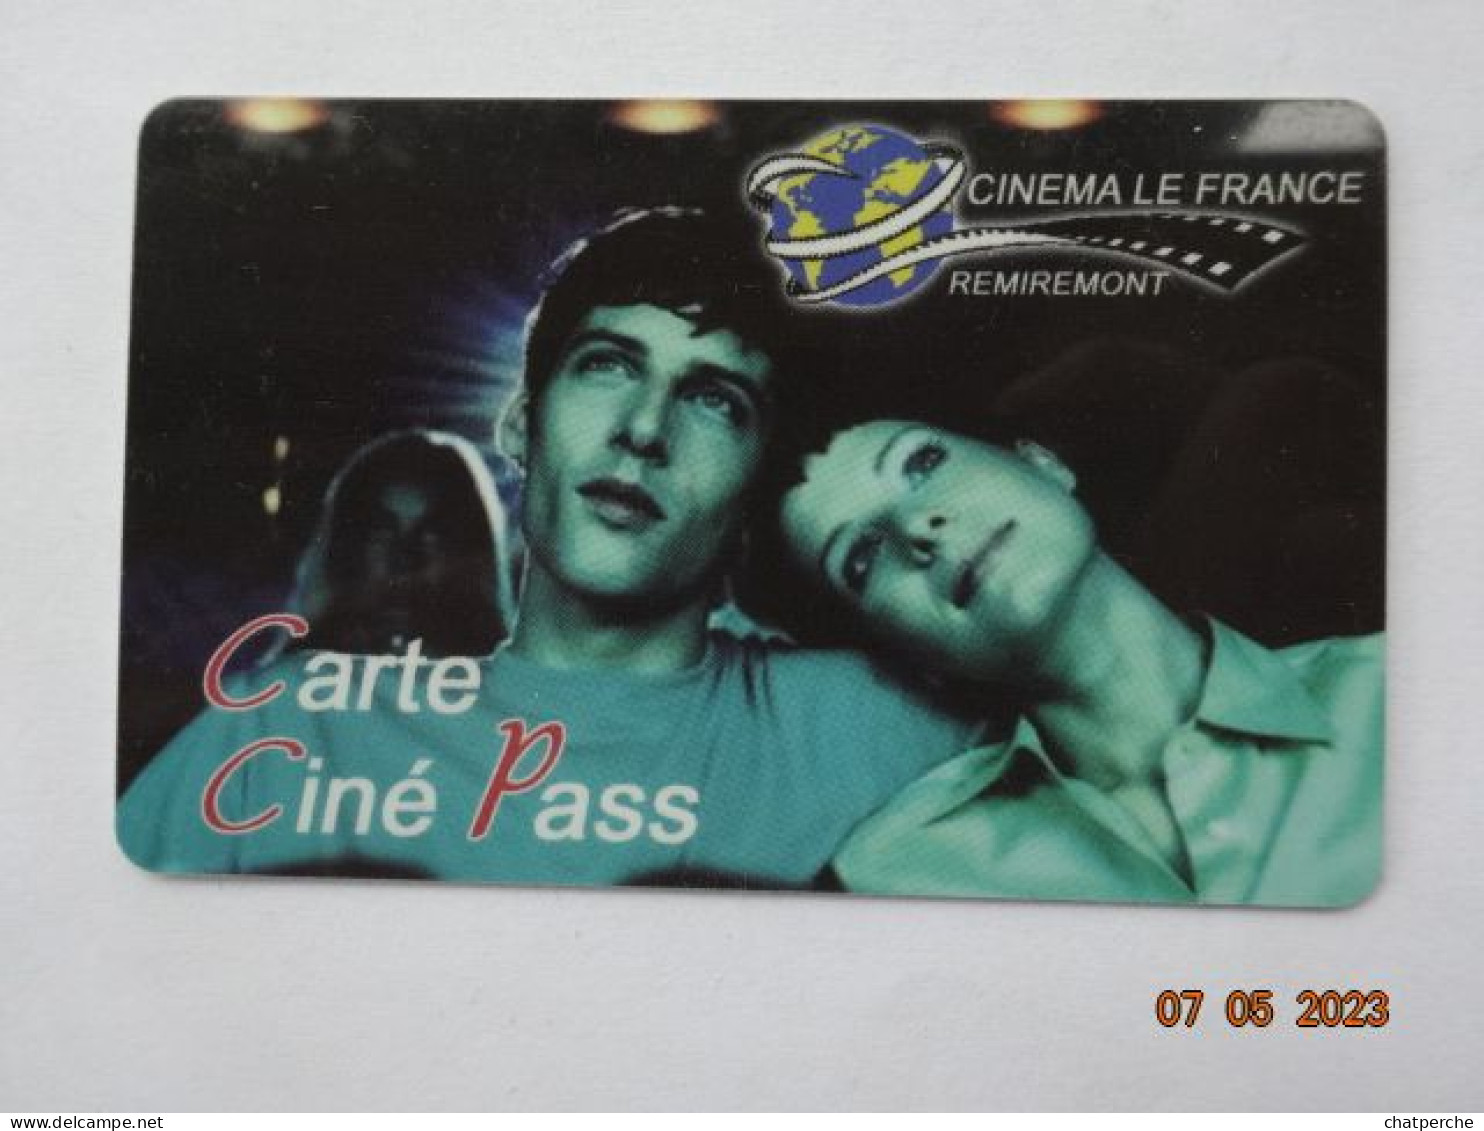 CINECARTE CARTE CINEMA CINE CARD BANDE MAGNETIQUE  CINEMA LE FRANCE REMIREMONT 88 VOSGES  CINE PASS - Kinokarten